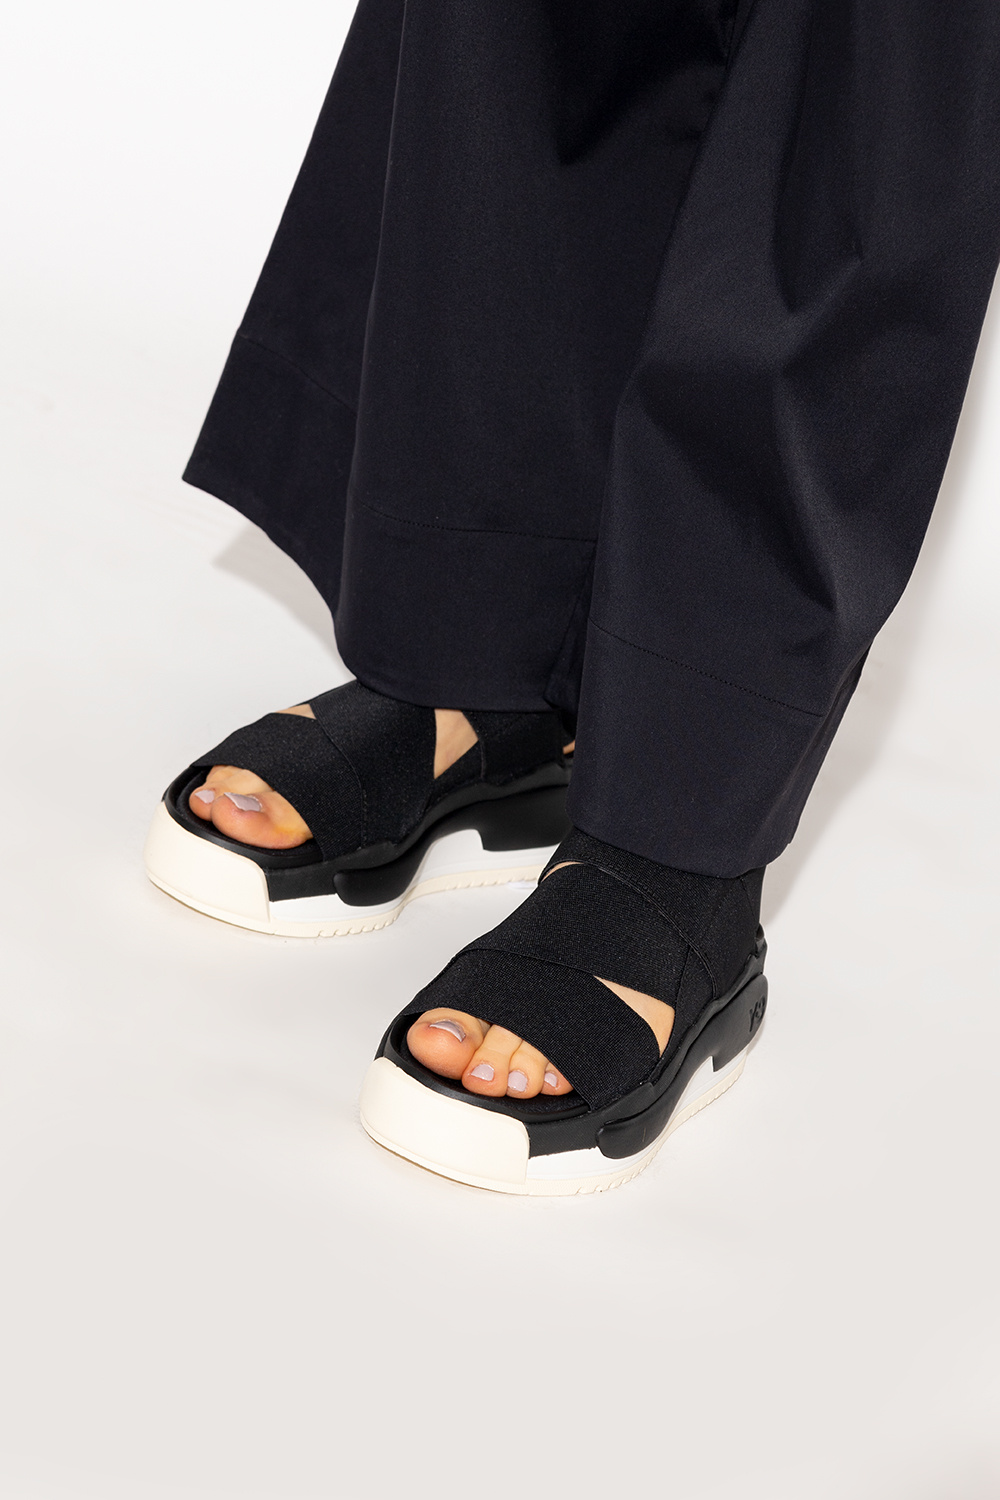 Y-3 Yohji Yamamoto ‘Hokori’ sandals | Women's Shoes | Vitkac